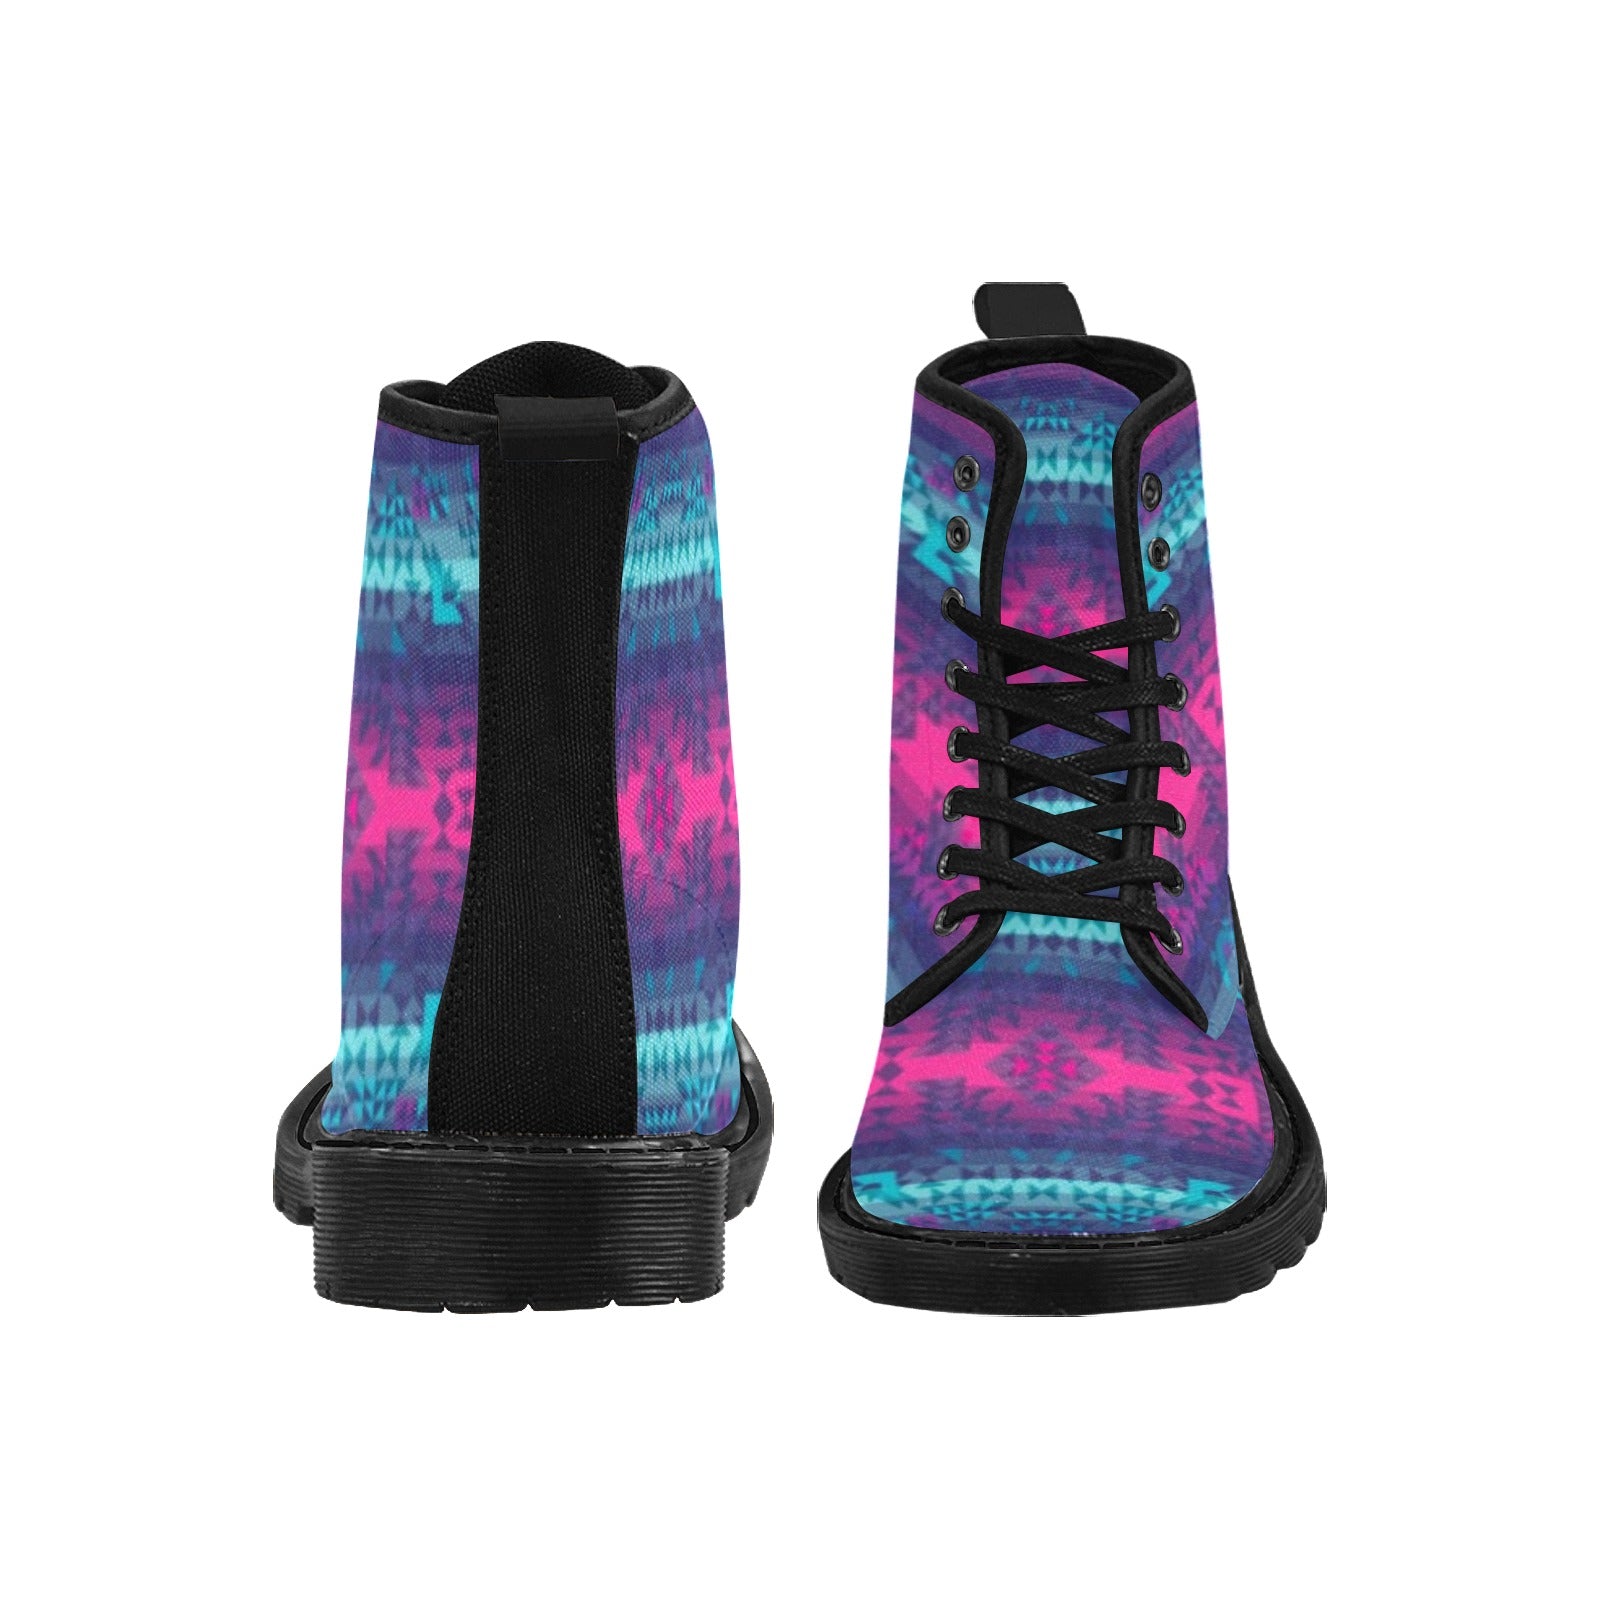 Dimensional Brightburn Boots for Women (Black)